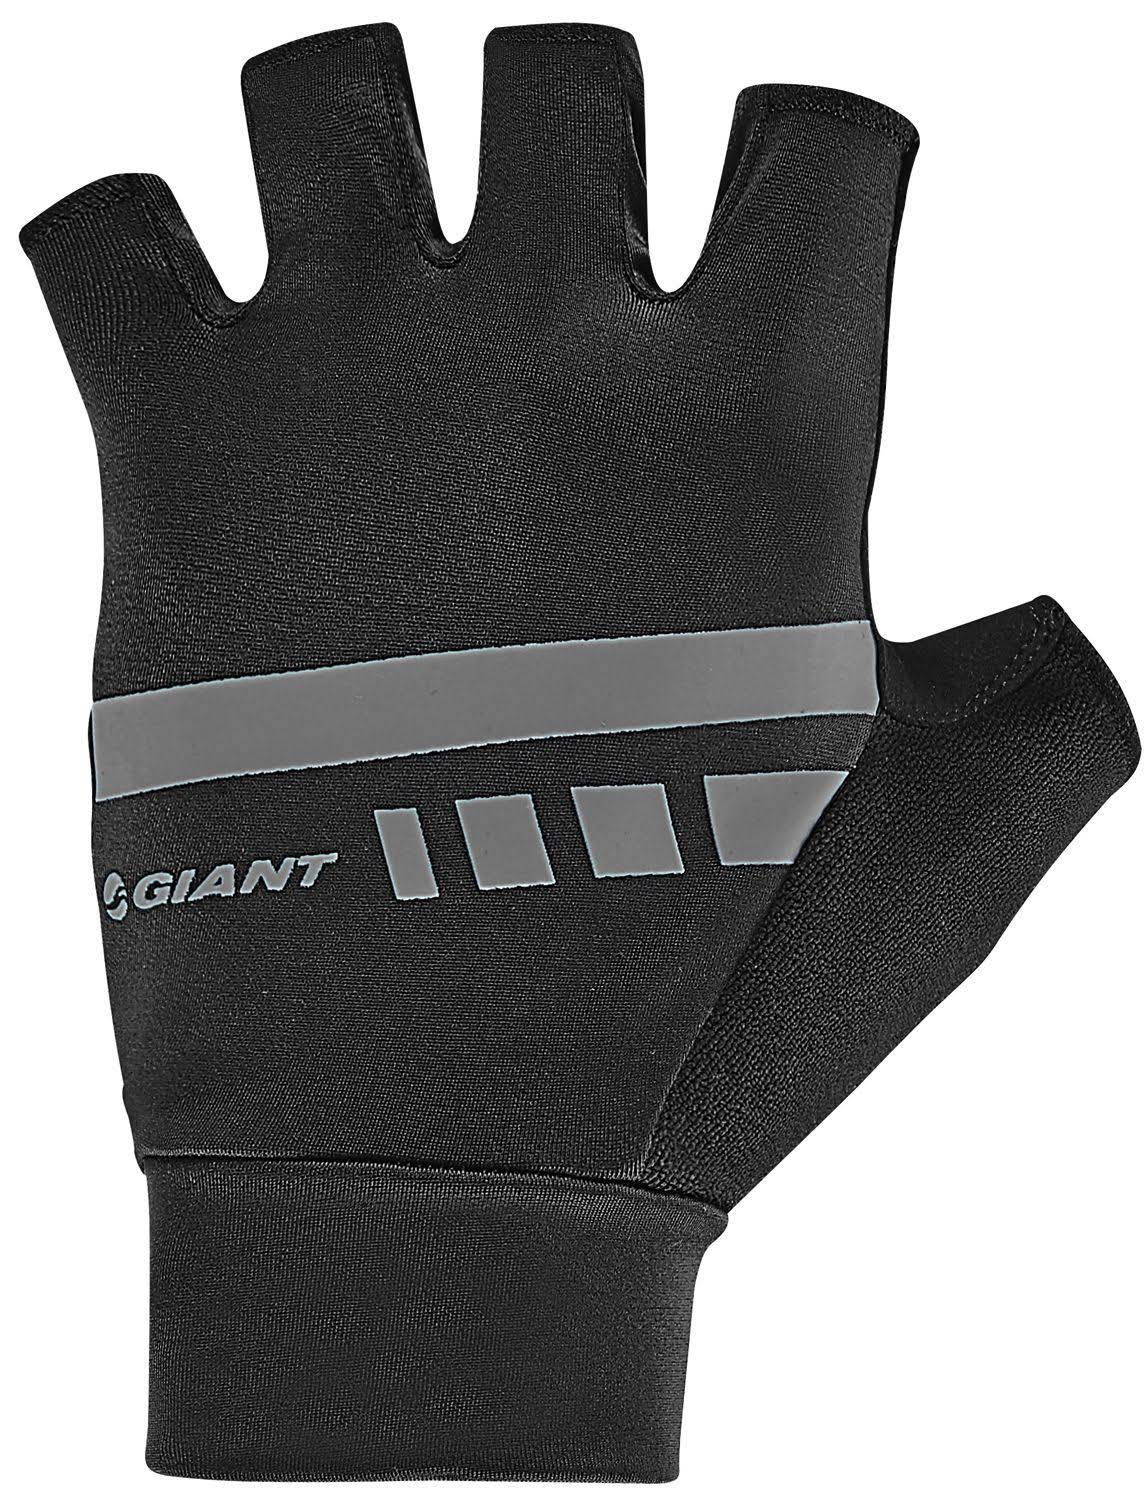 Giant Podium Short Finger Cycling Gloves Black/Grey (E19)